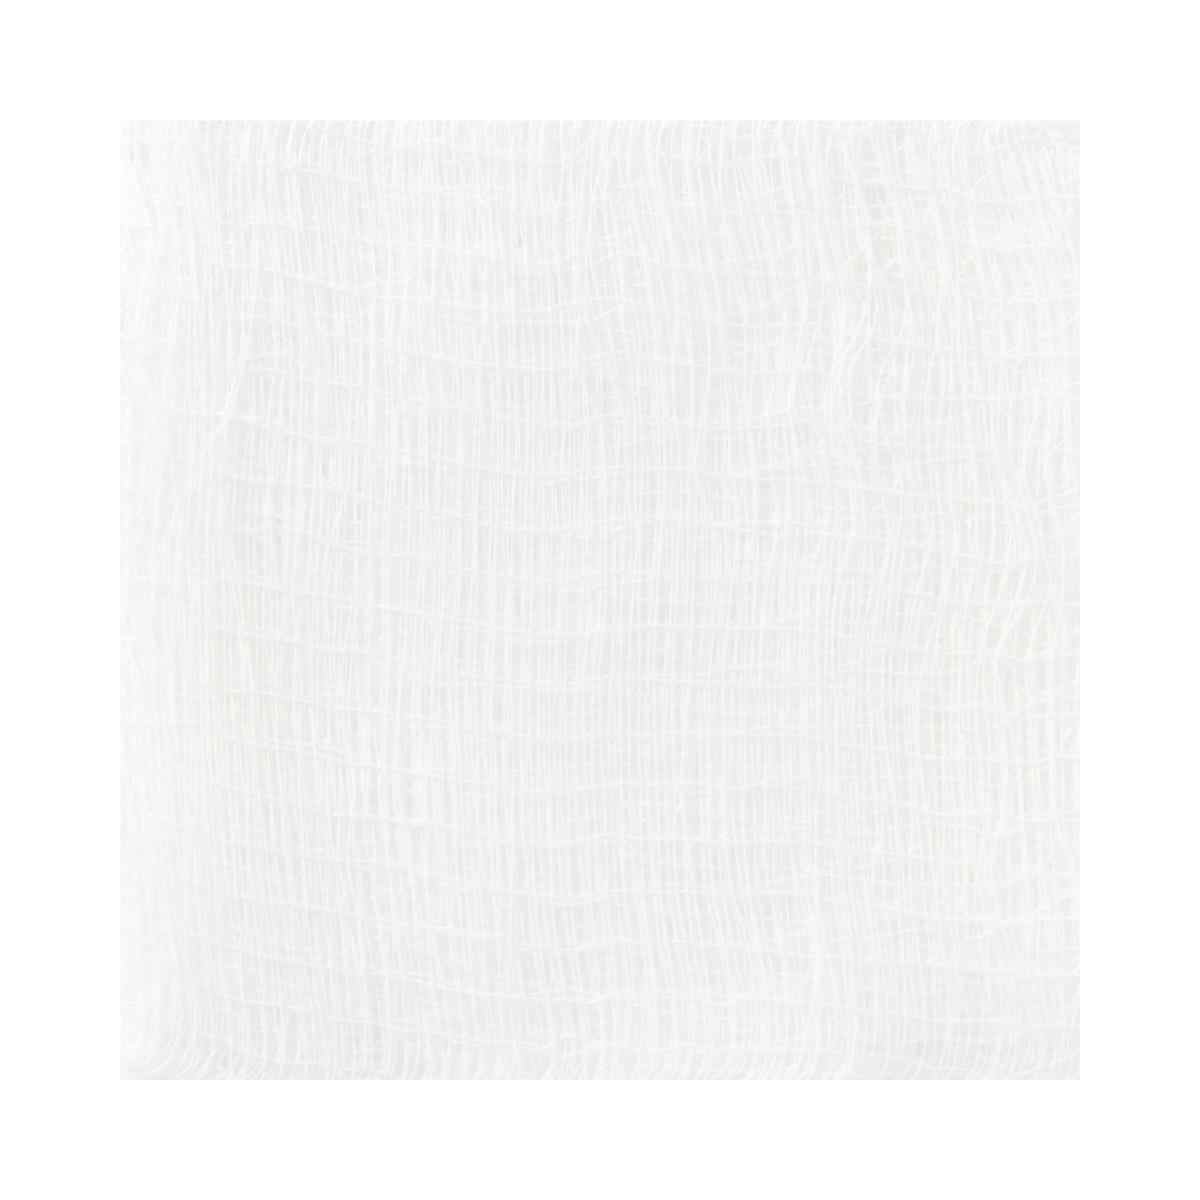 Medline Woven Cotton 16-Ply Gauze Sponge, Non-Sterile